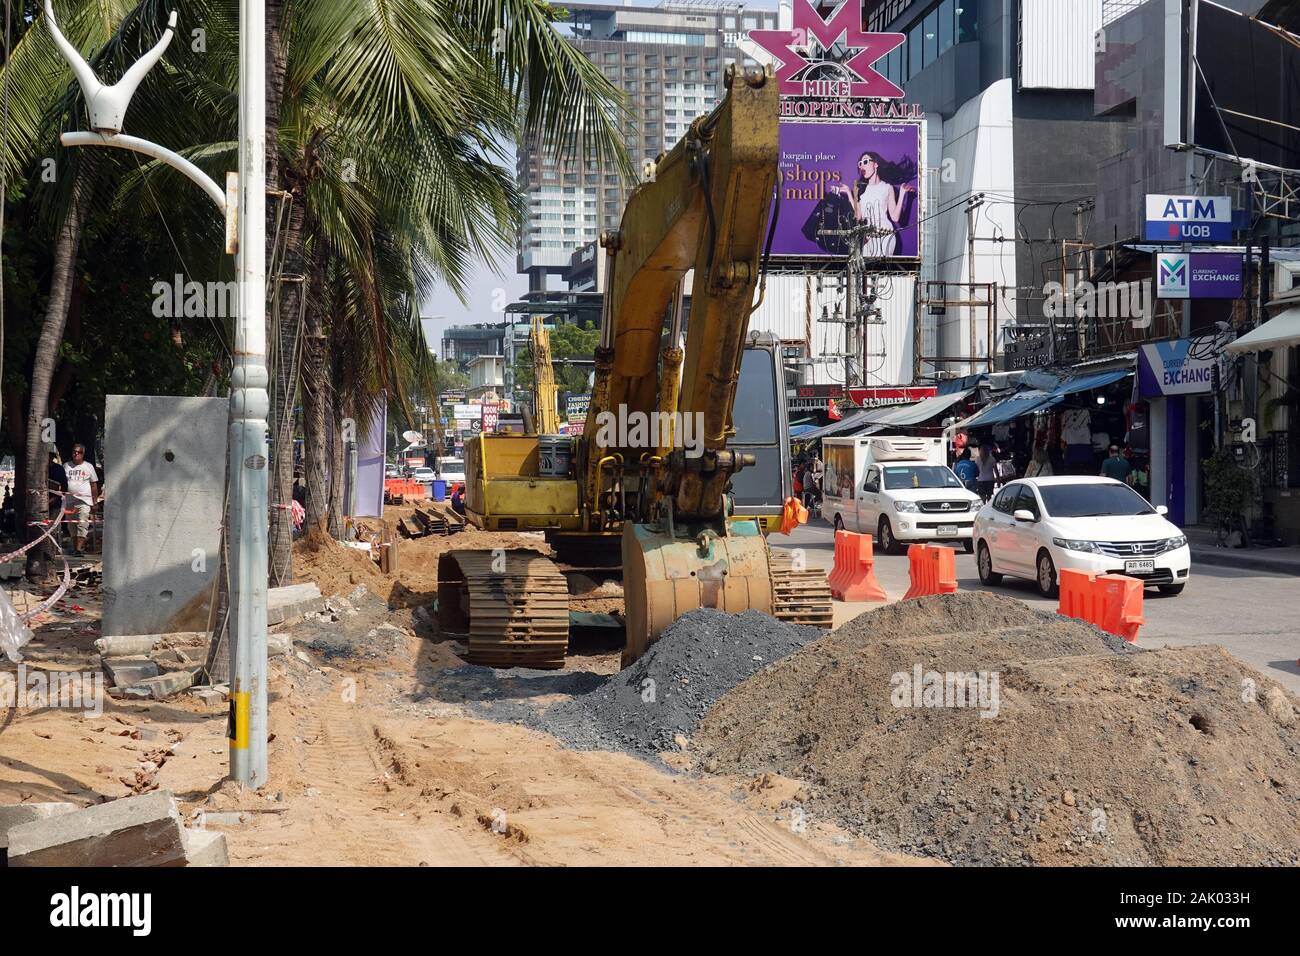 PATTAYA, THAILAND - December 24, 2019: Excavator on construction site on Beach Street. Stock Photo